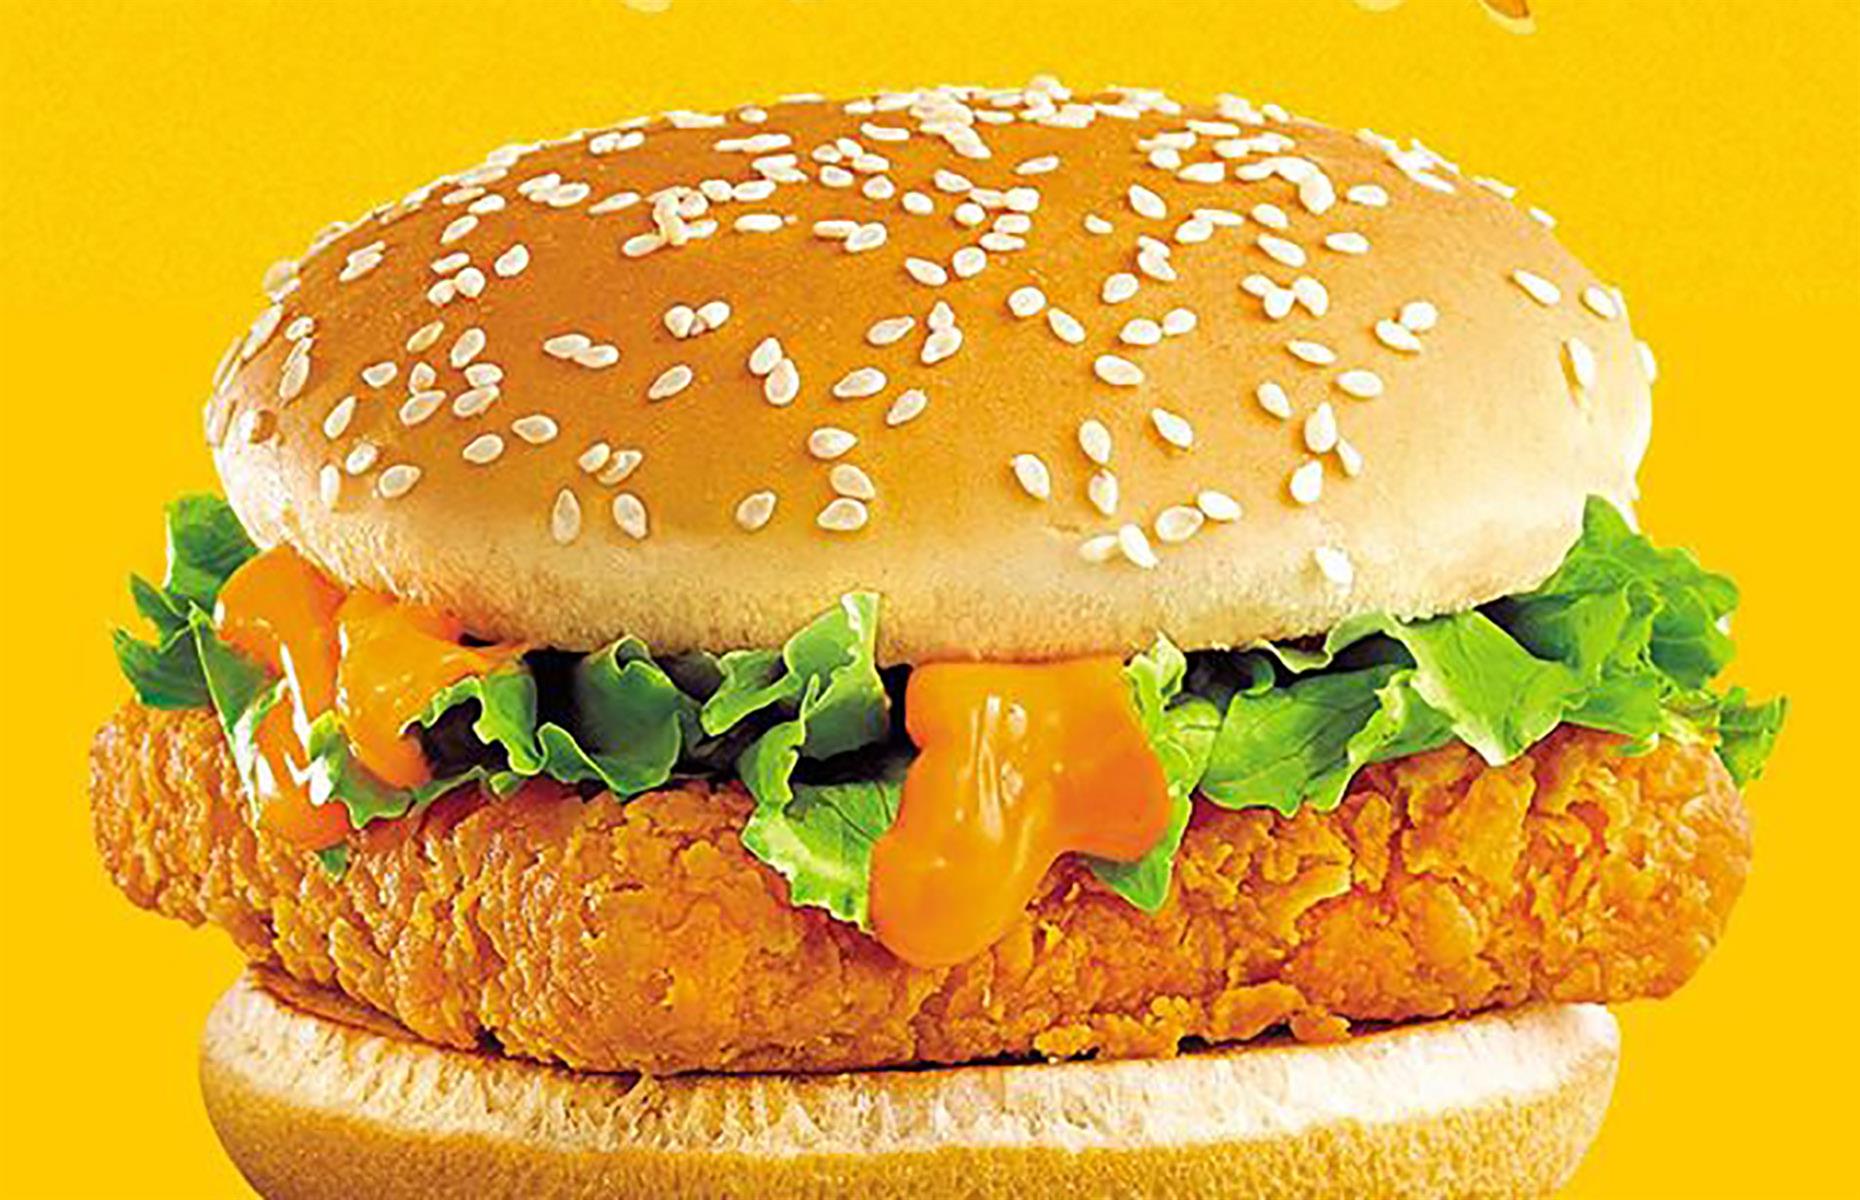 Deluxe Shrimp Burger (Korean McDonald's)